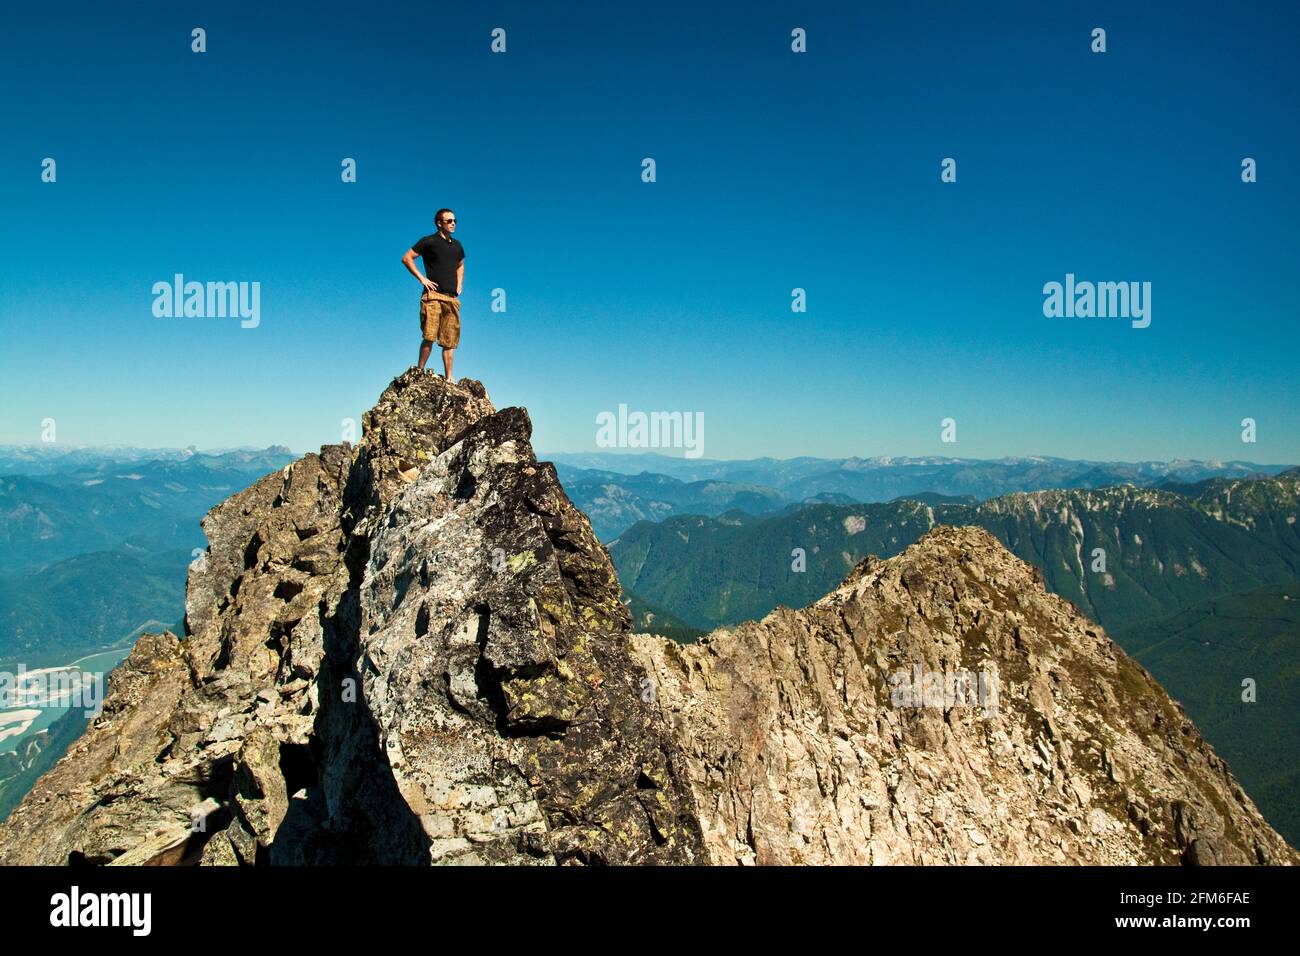 Hiker standing on mountain summit, Chilliwack, B.C. Canada. Stock Photo